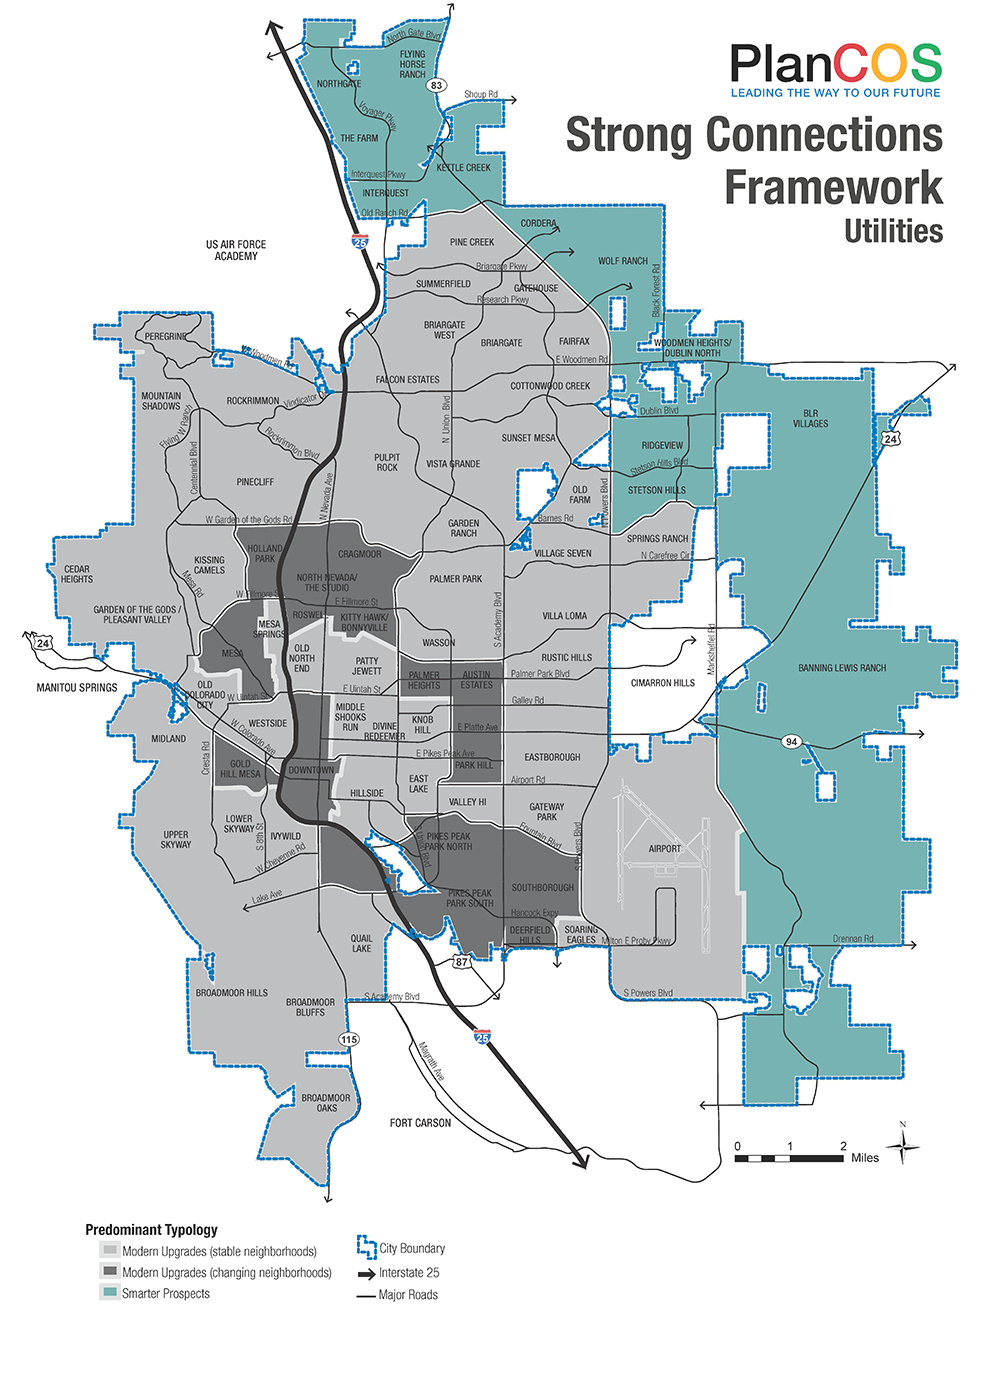 Utilities framwork map